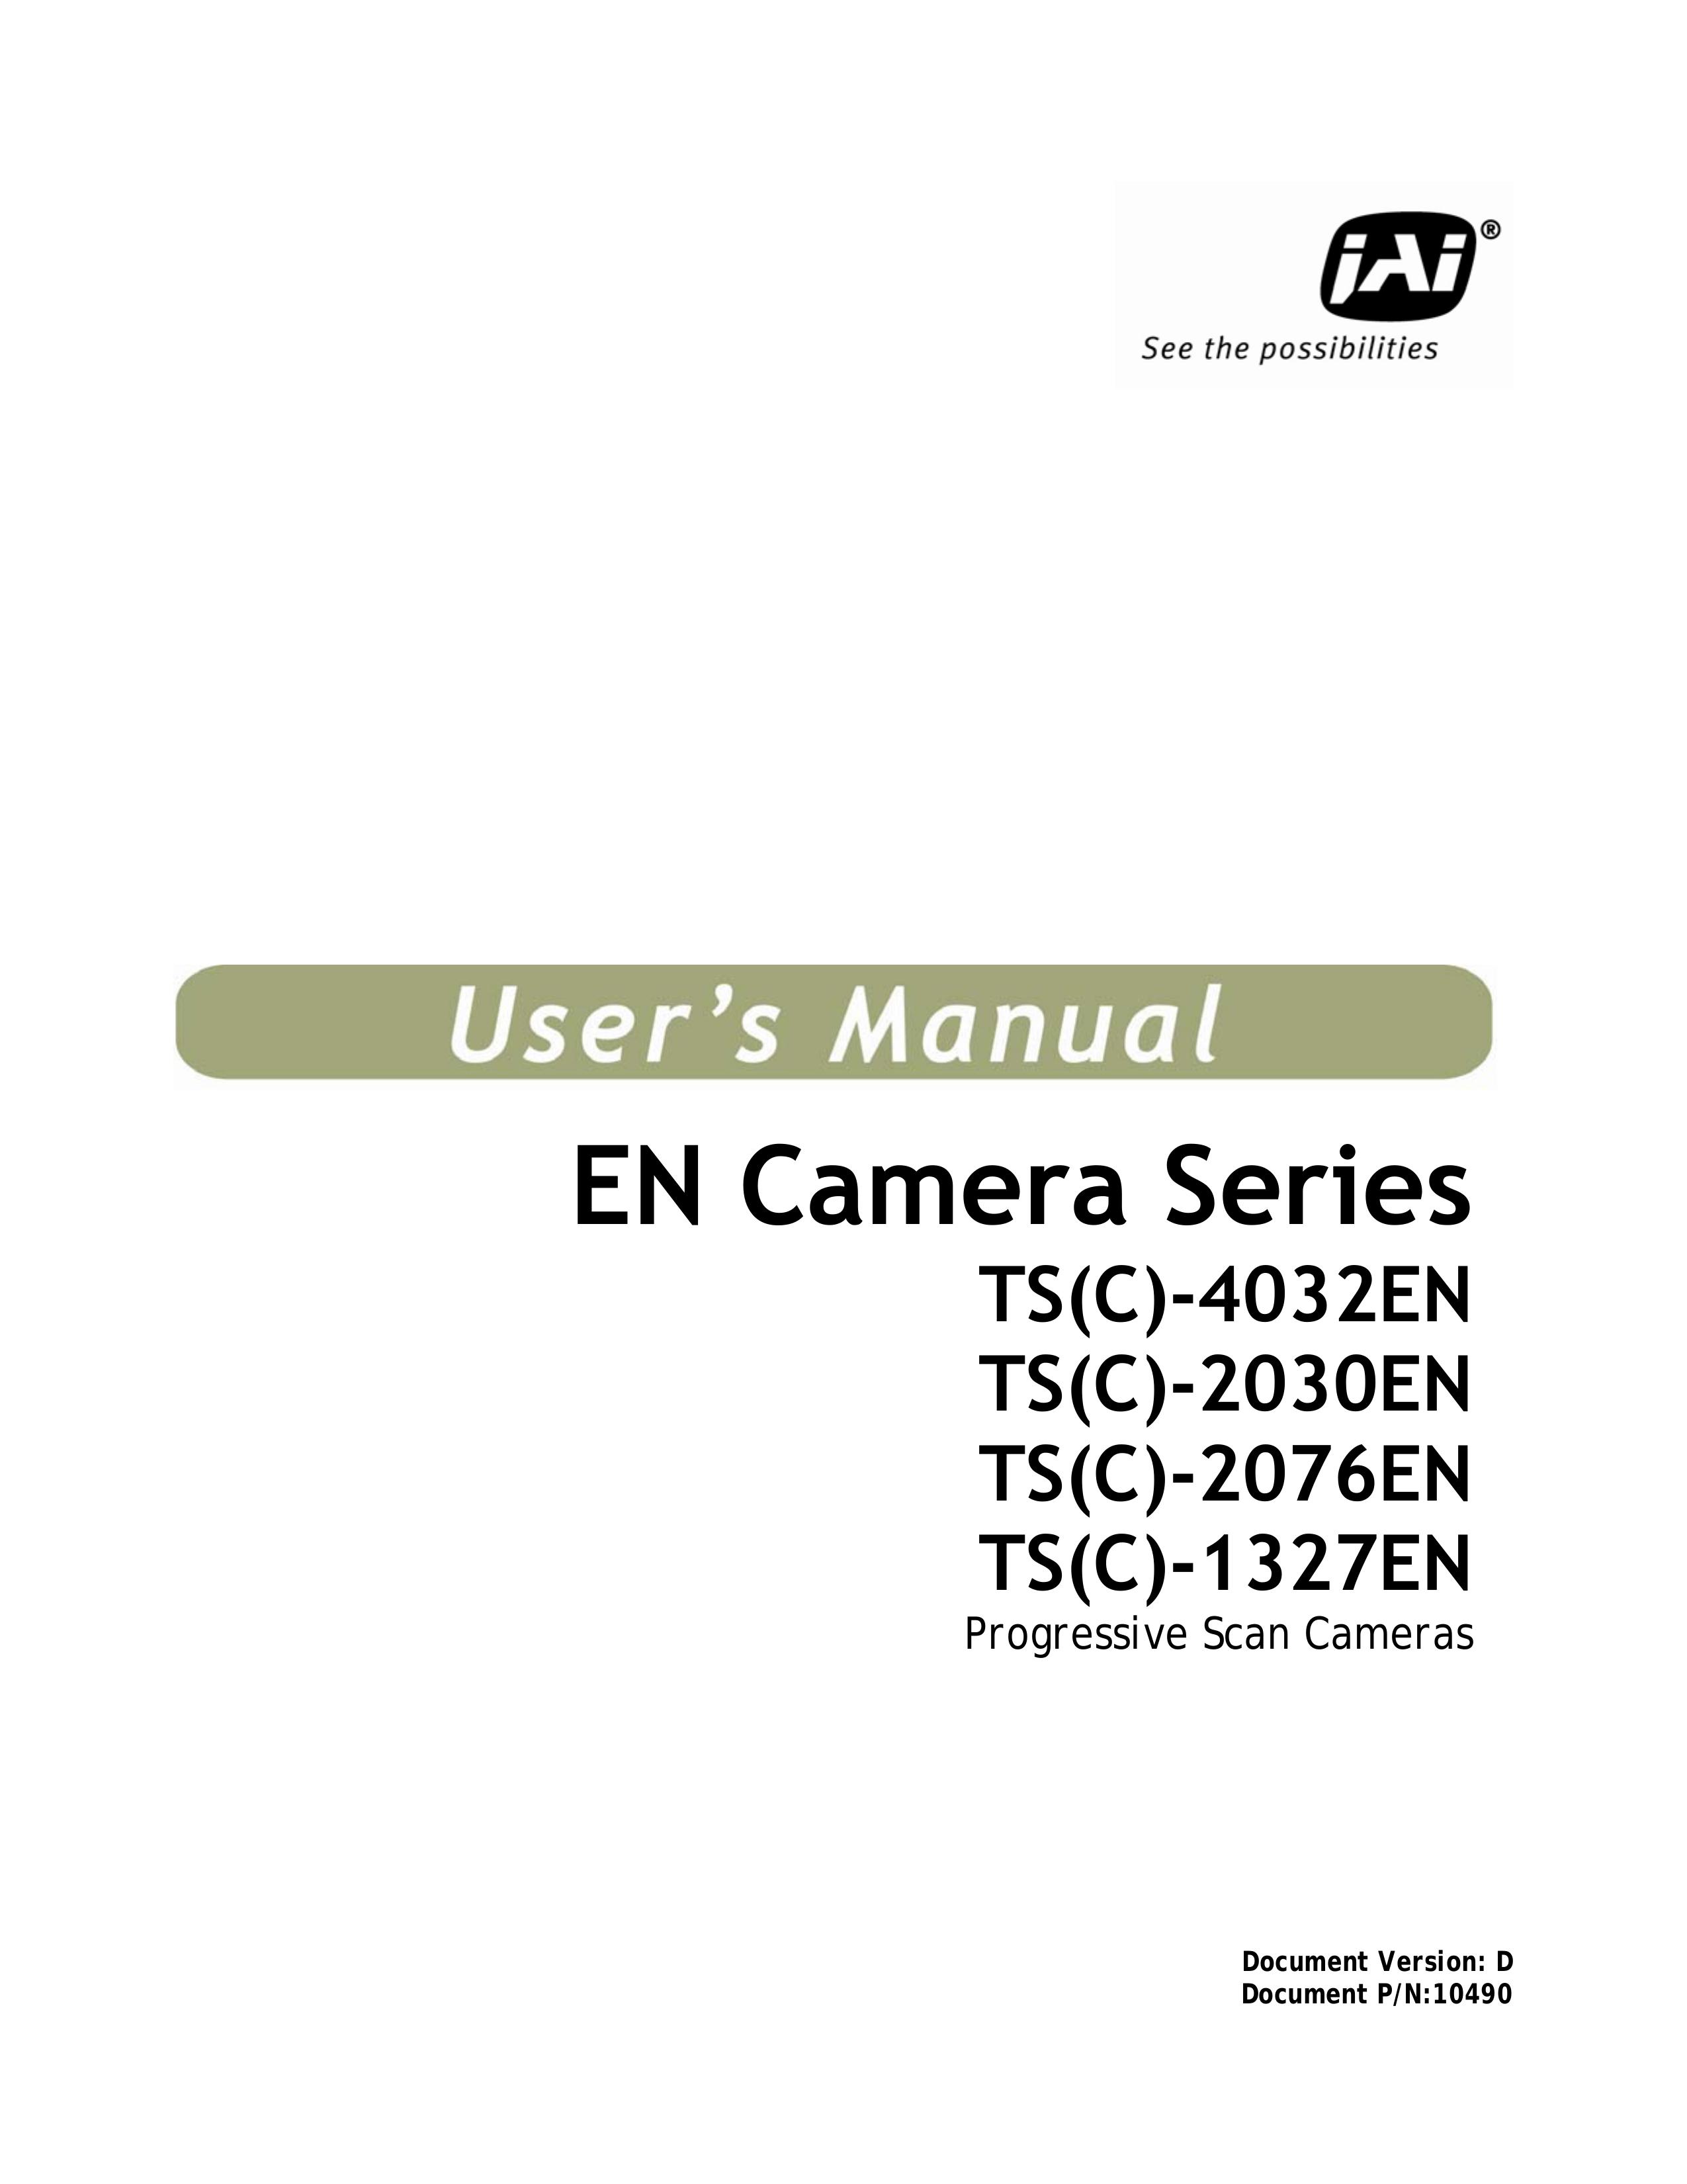 JAI TS(C)-2030EN Digital Camera User Manual